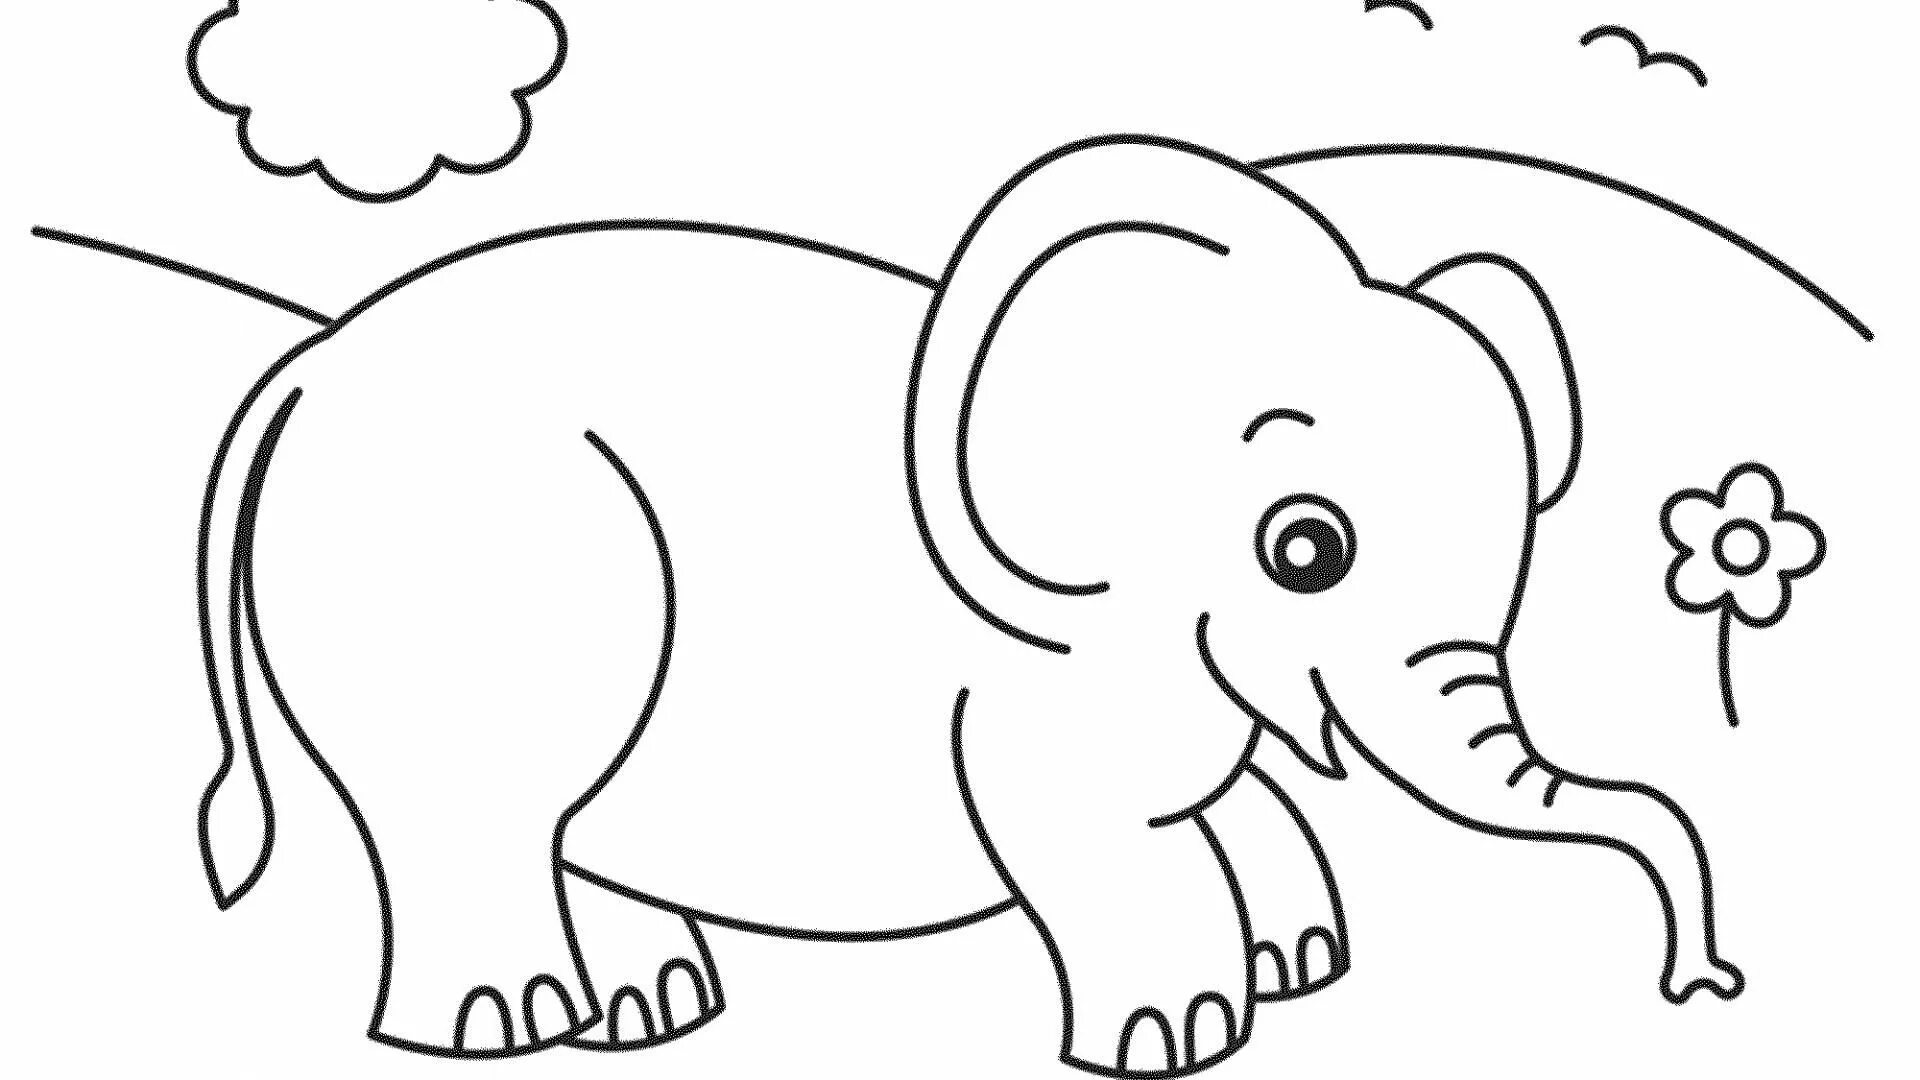 Animal drawings for kids #5